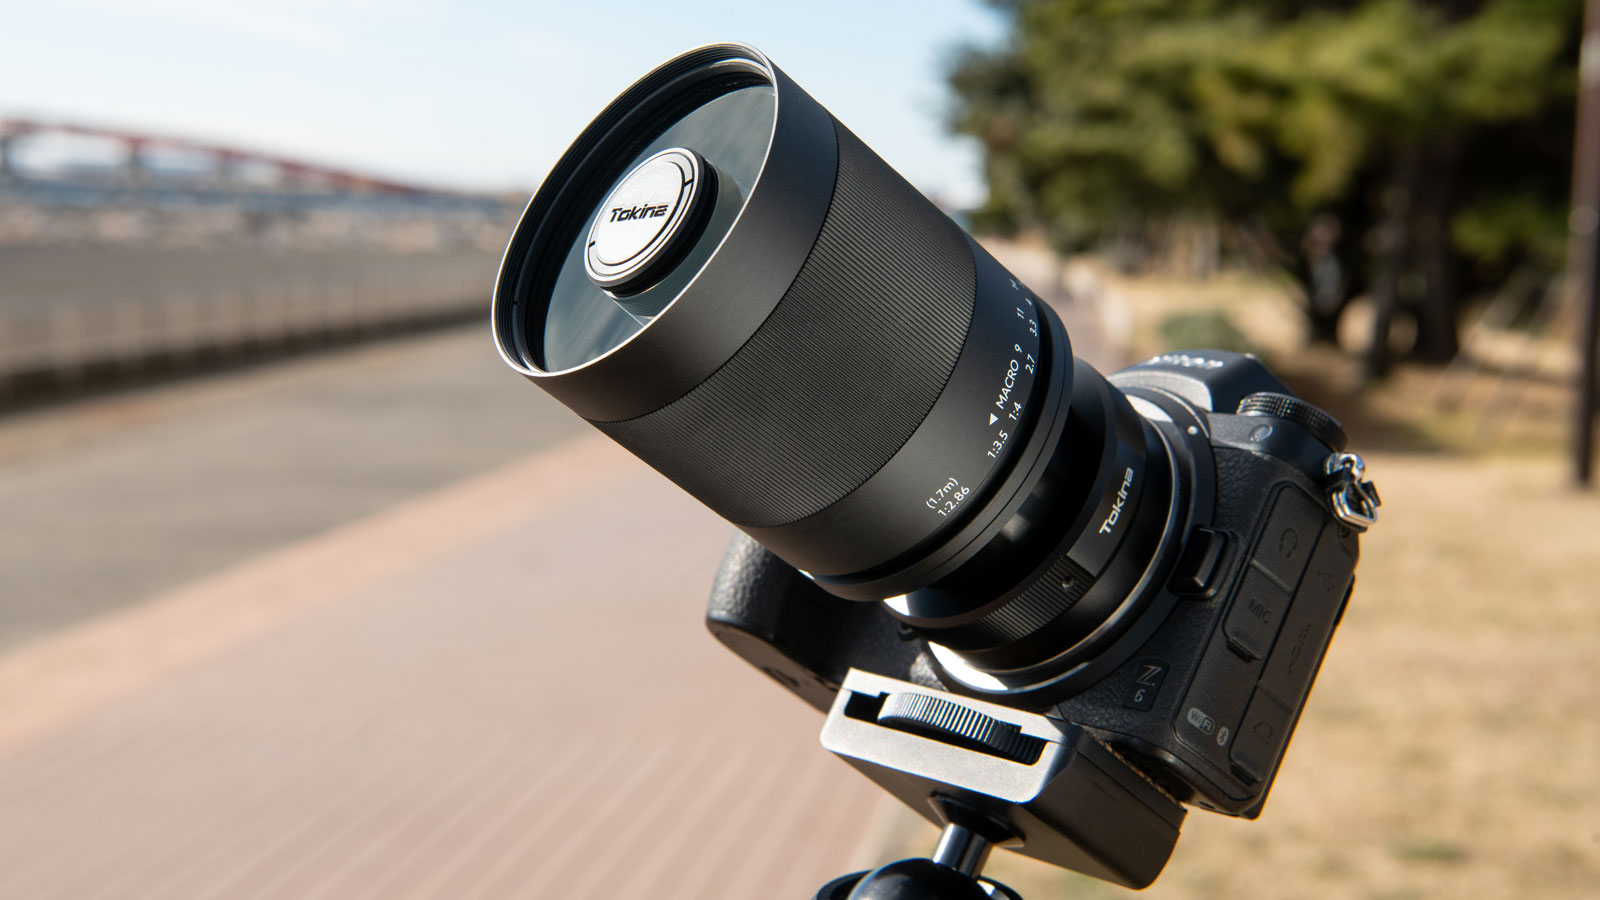 Tokina announced a new SZ 500mm f/8 Reflex MF super-tele lens for 